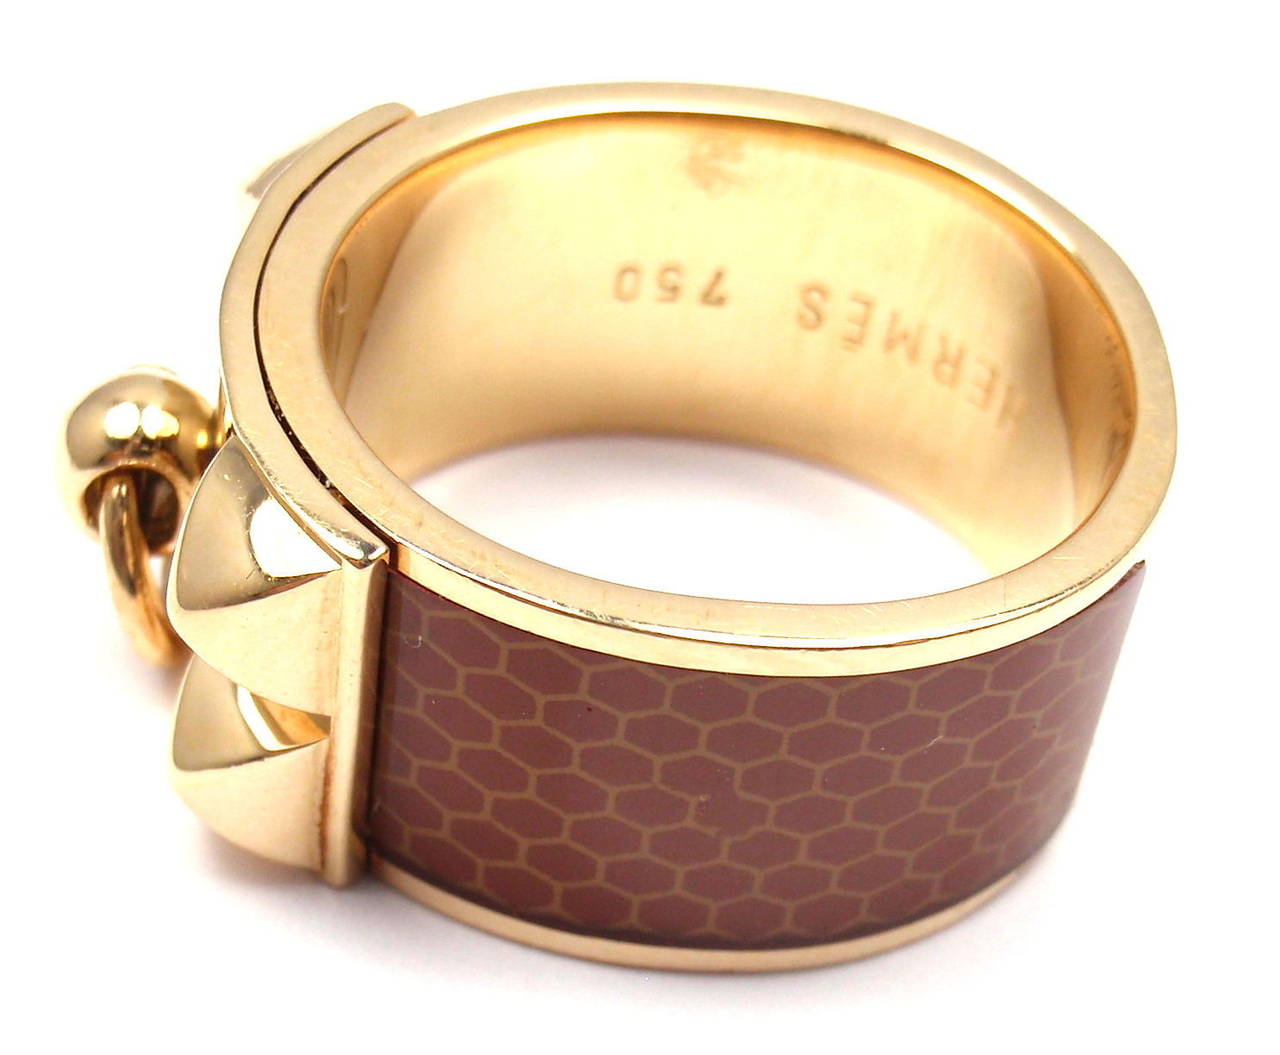 Hermes Collier de Chien Enamel Gold Band Ring For Sale at 1stdibs